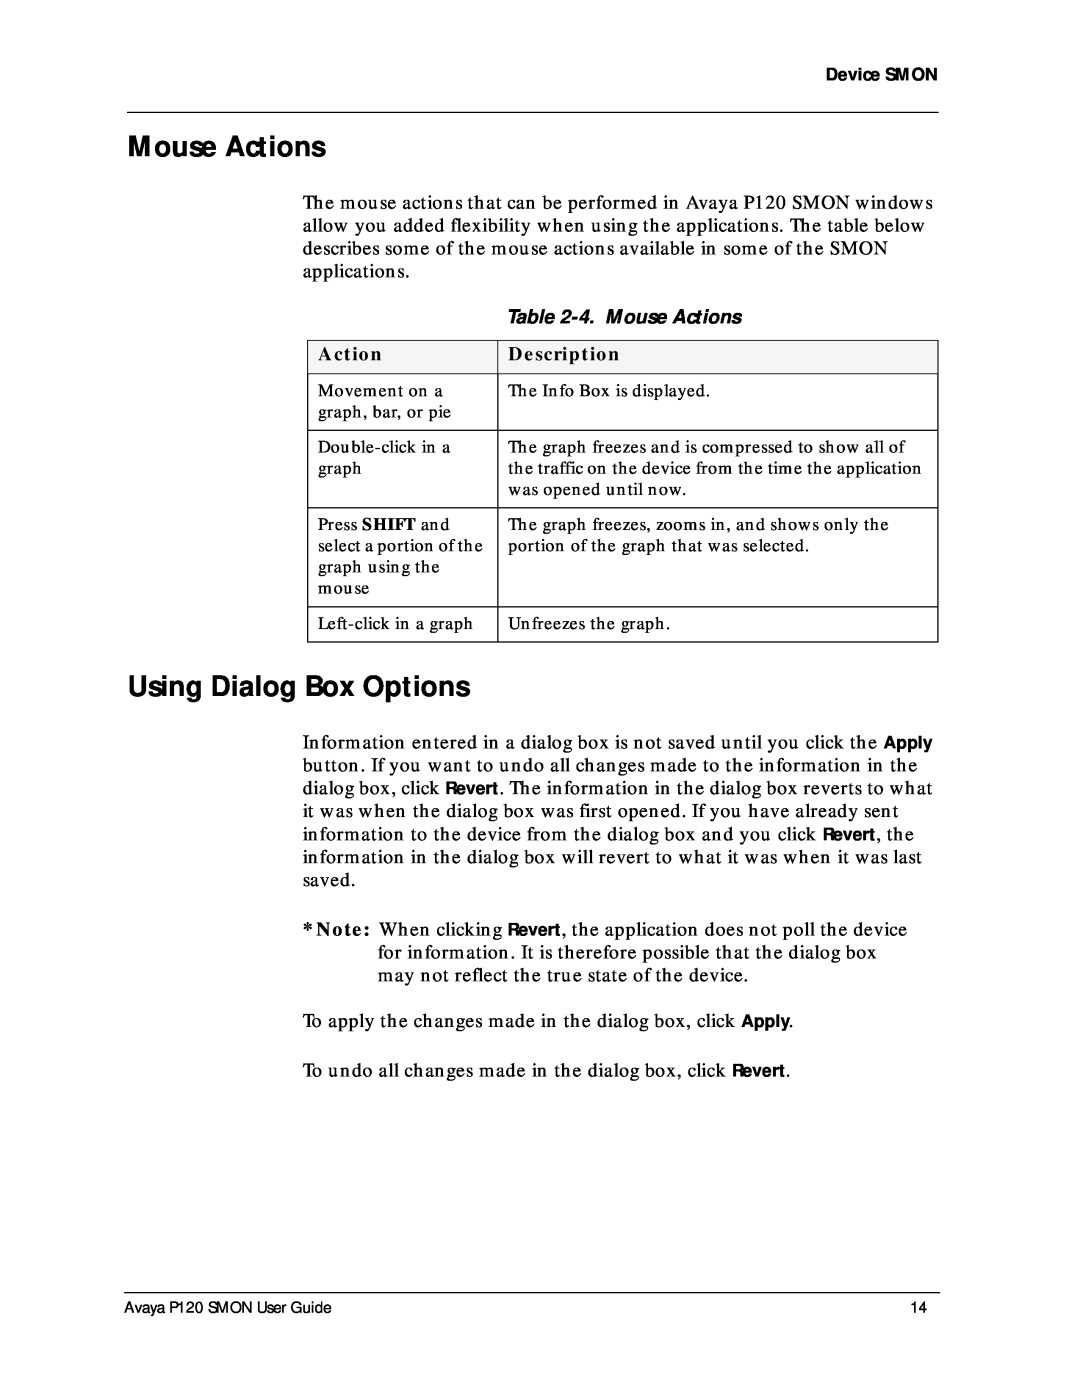 Avaya P120 SMON manual Using Dialog Box Options, 4. Mouse Actions 